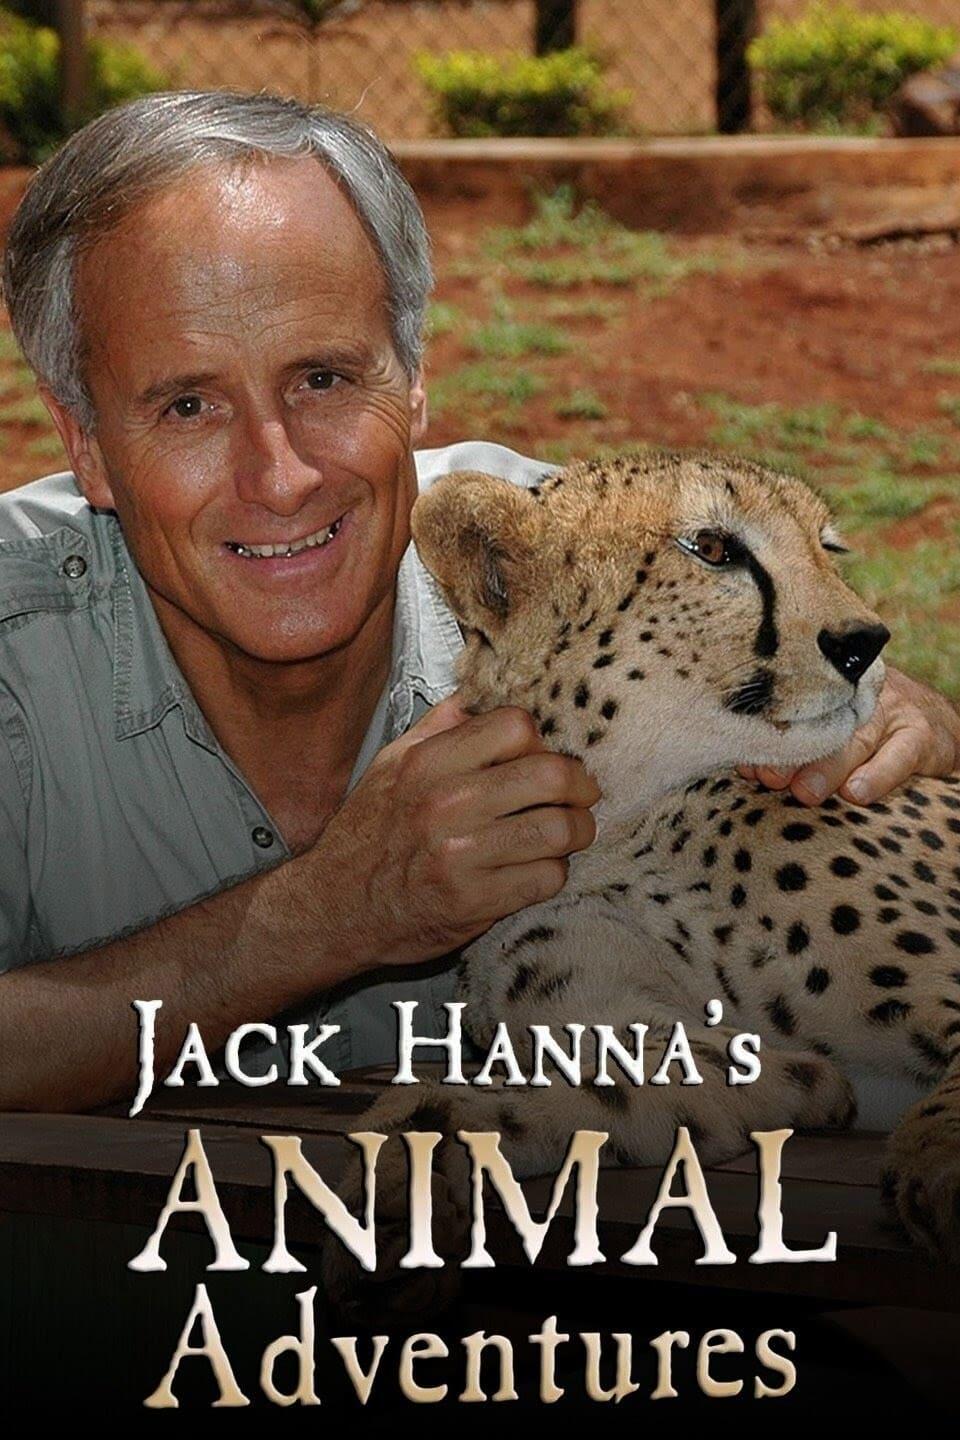 Jack Hanna's Animal Adventures poster